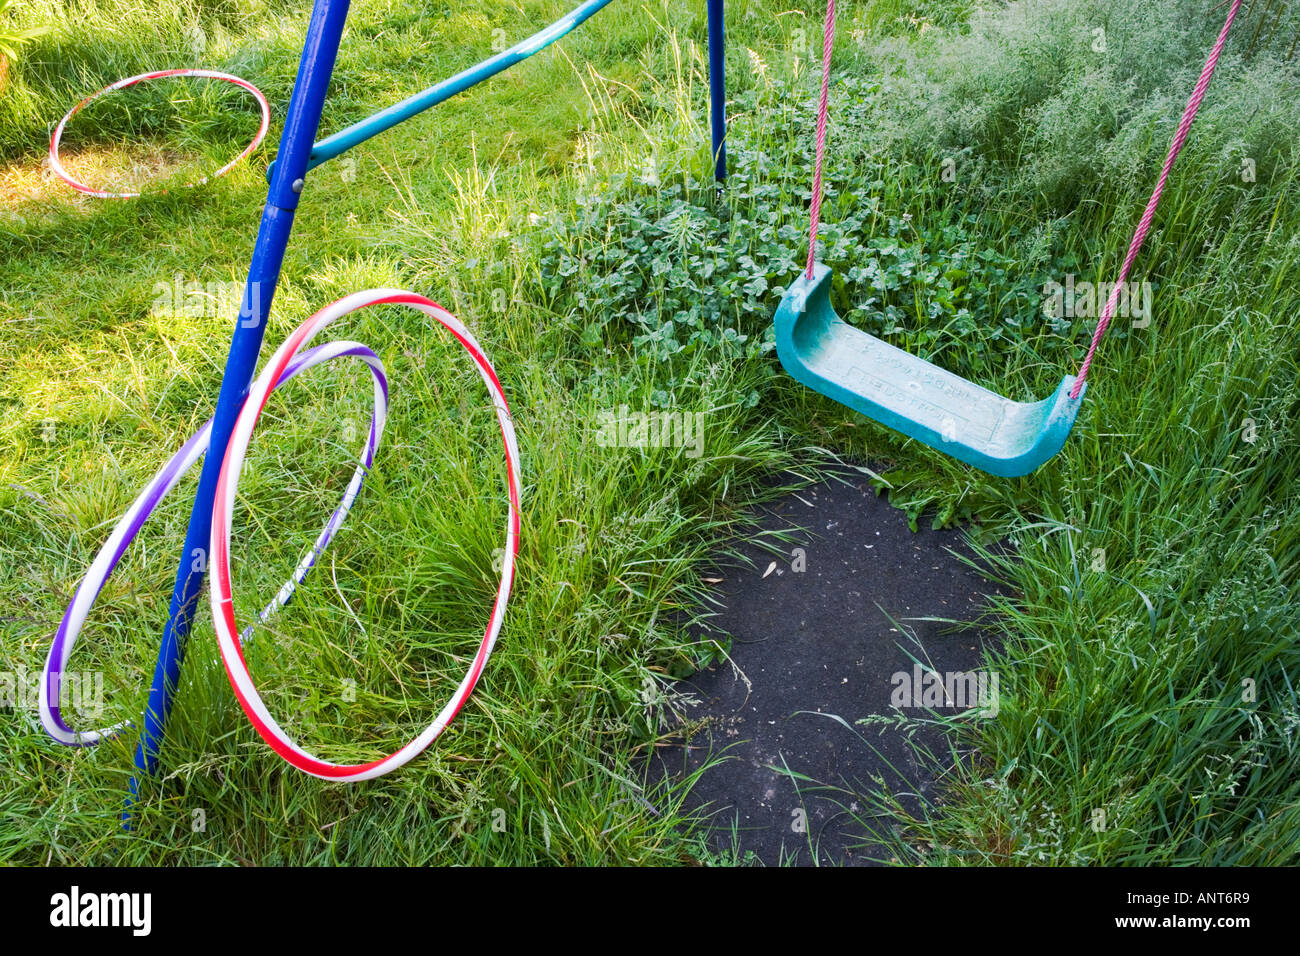 Hula hoops and garden swing Stock Photo